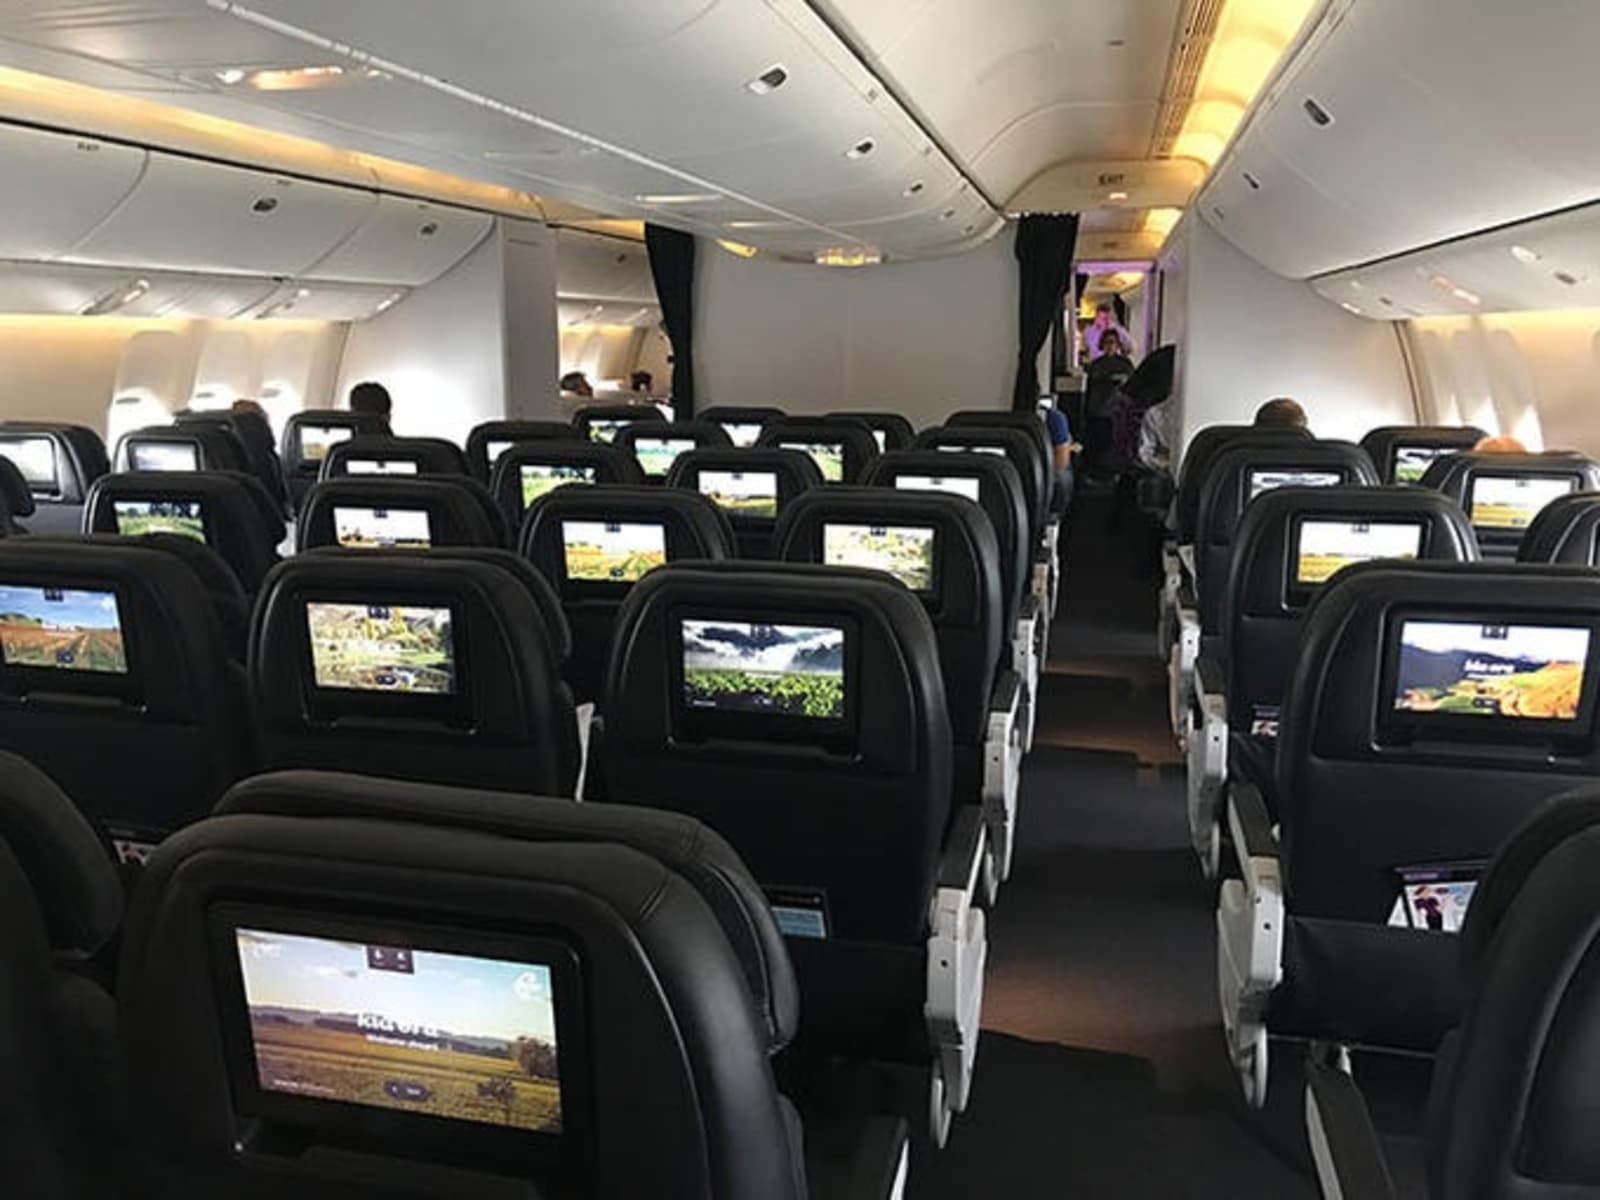 rs-the-air-new-zealand-premium-economy-cabin.jpg